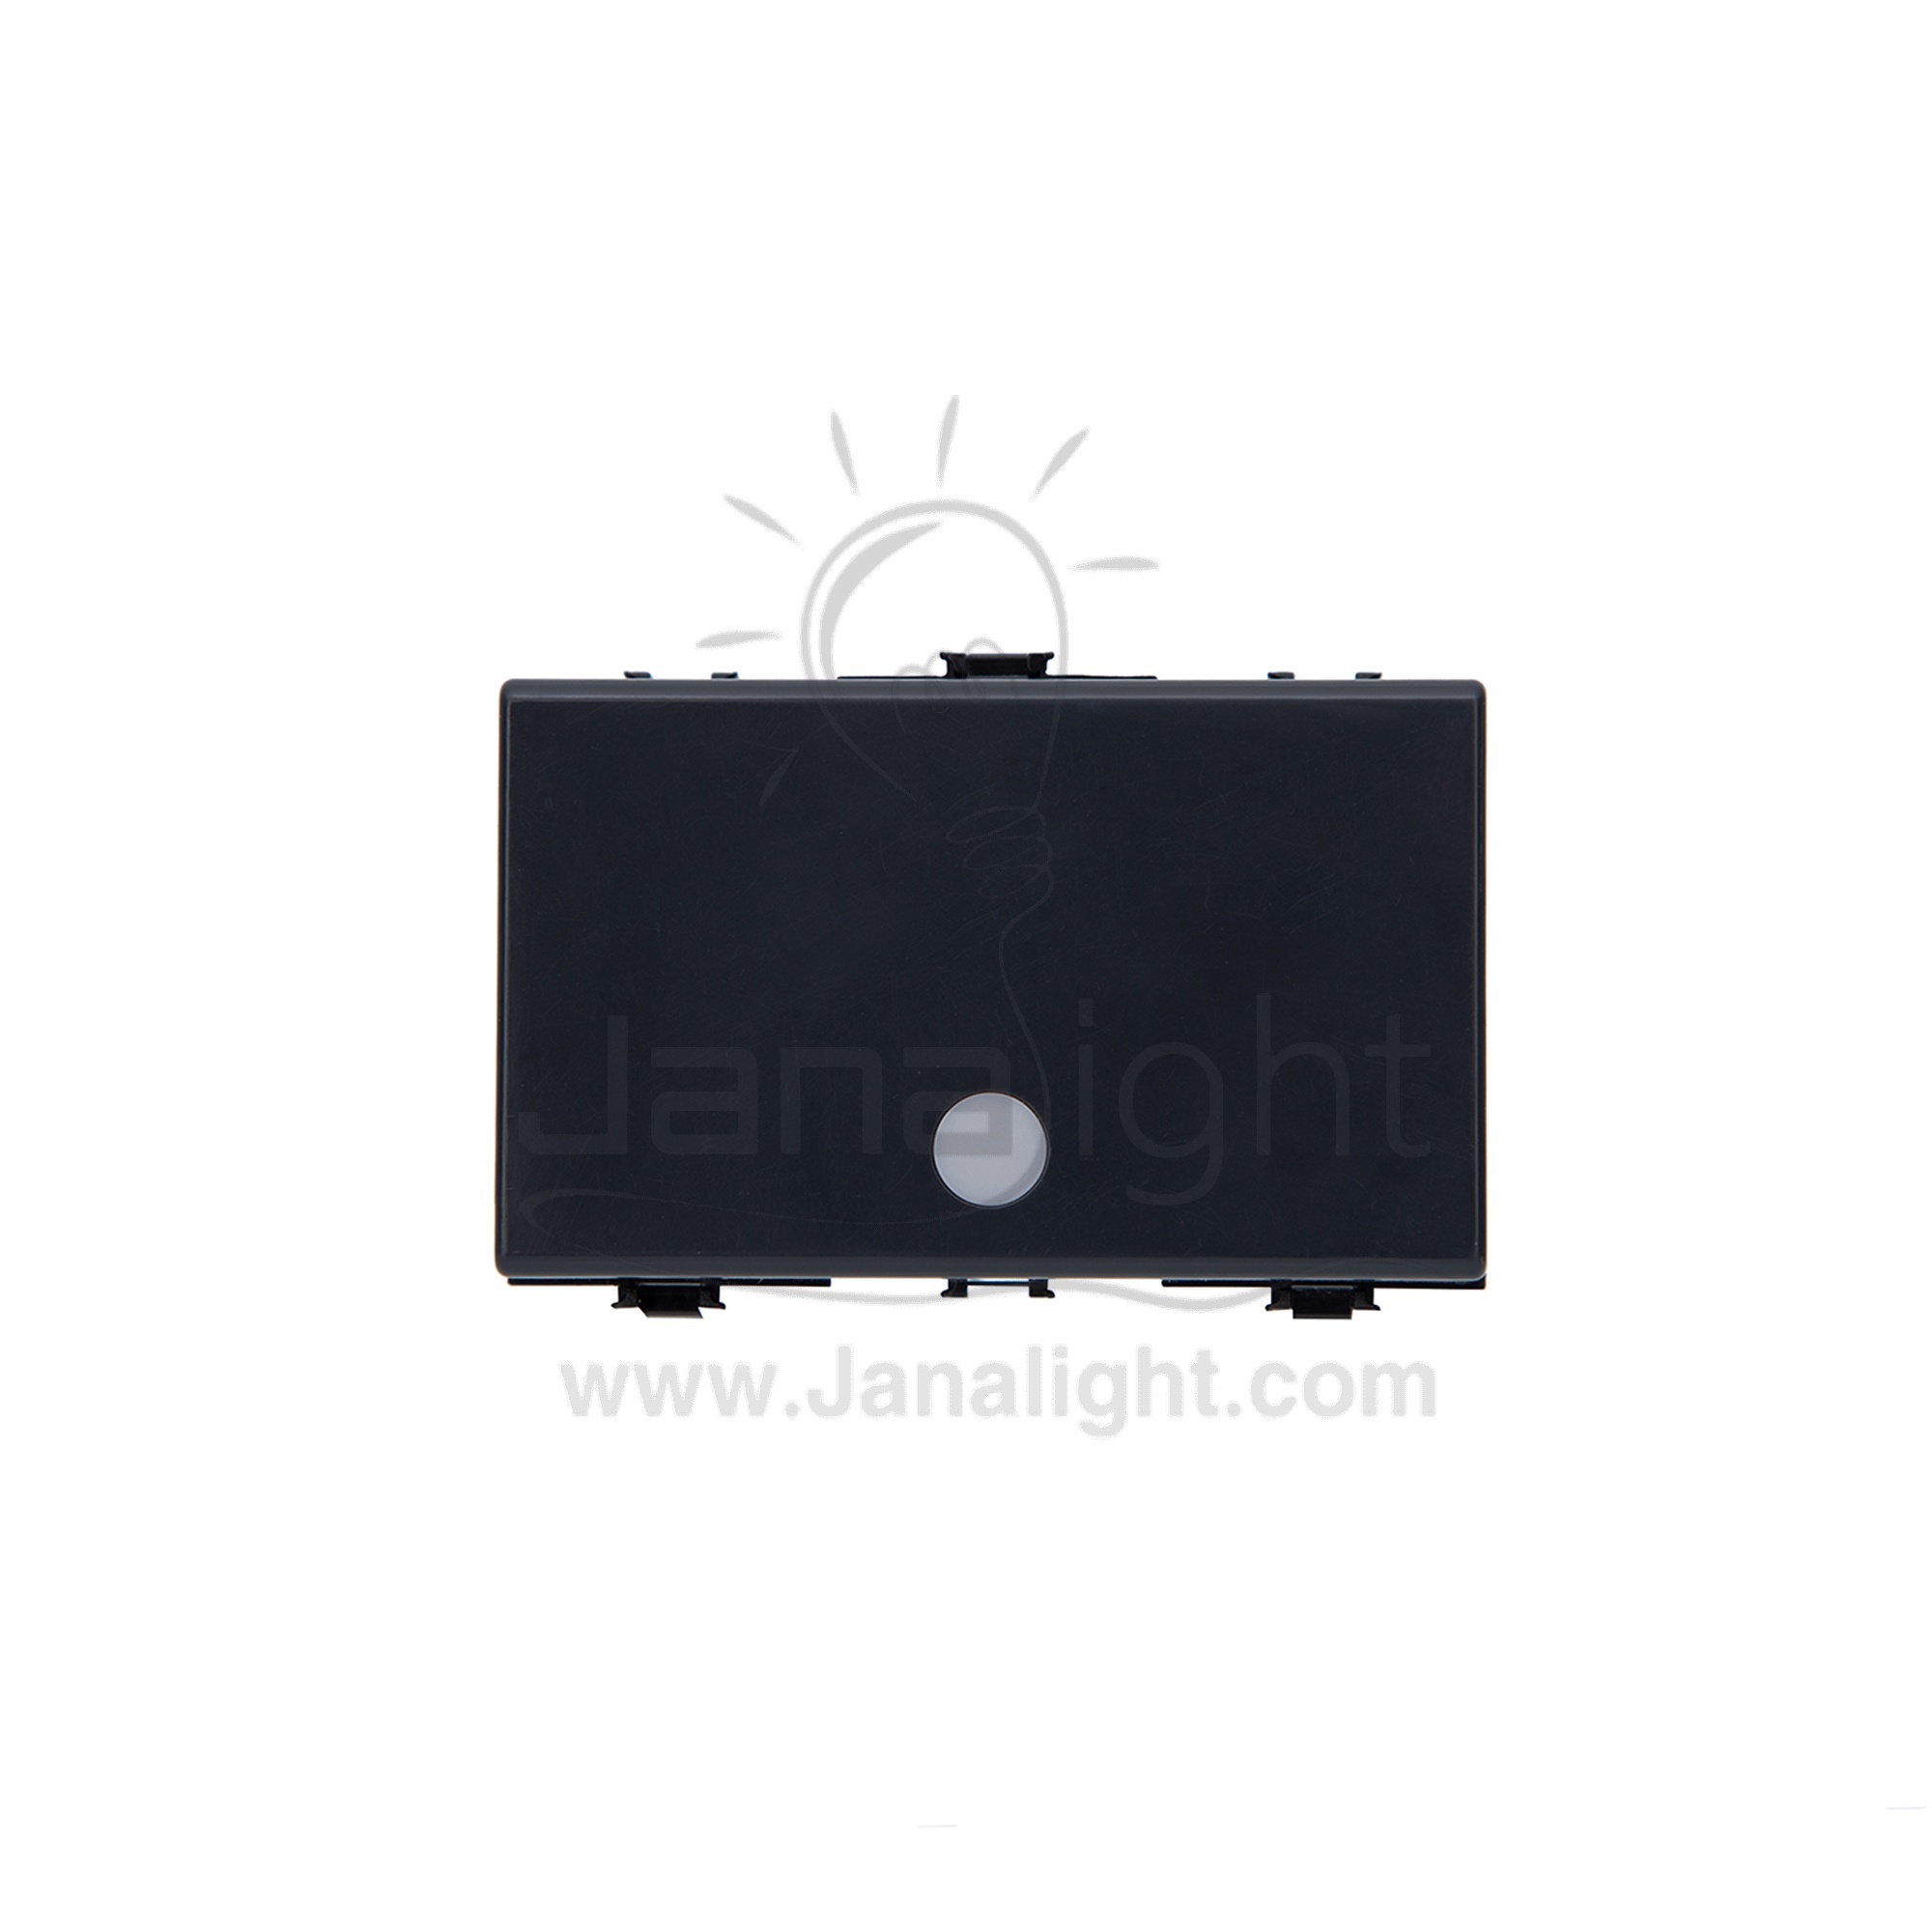 زر جرس بضوء عريض ماتكس اسود AG5005L/3E black wide doorbell switch with led matix edge